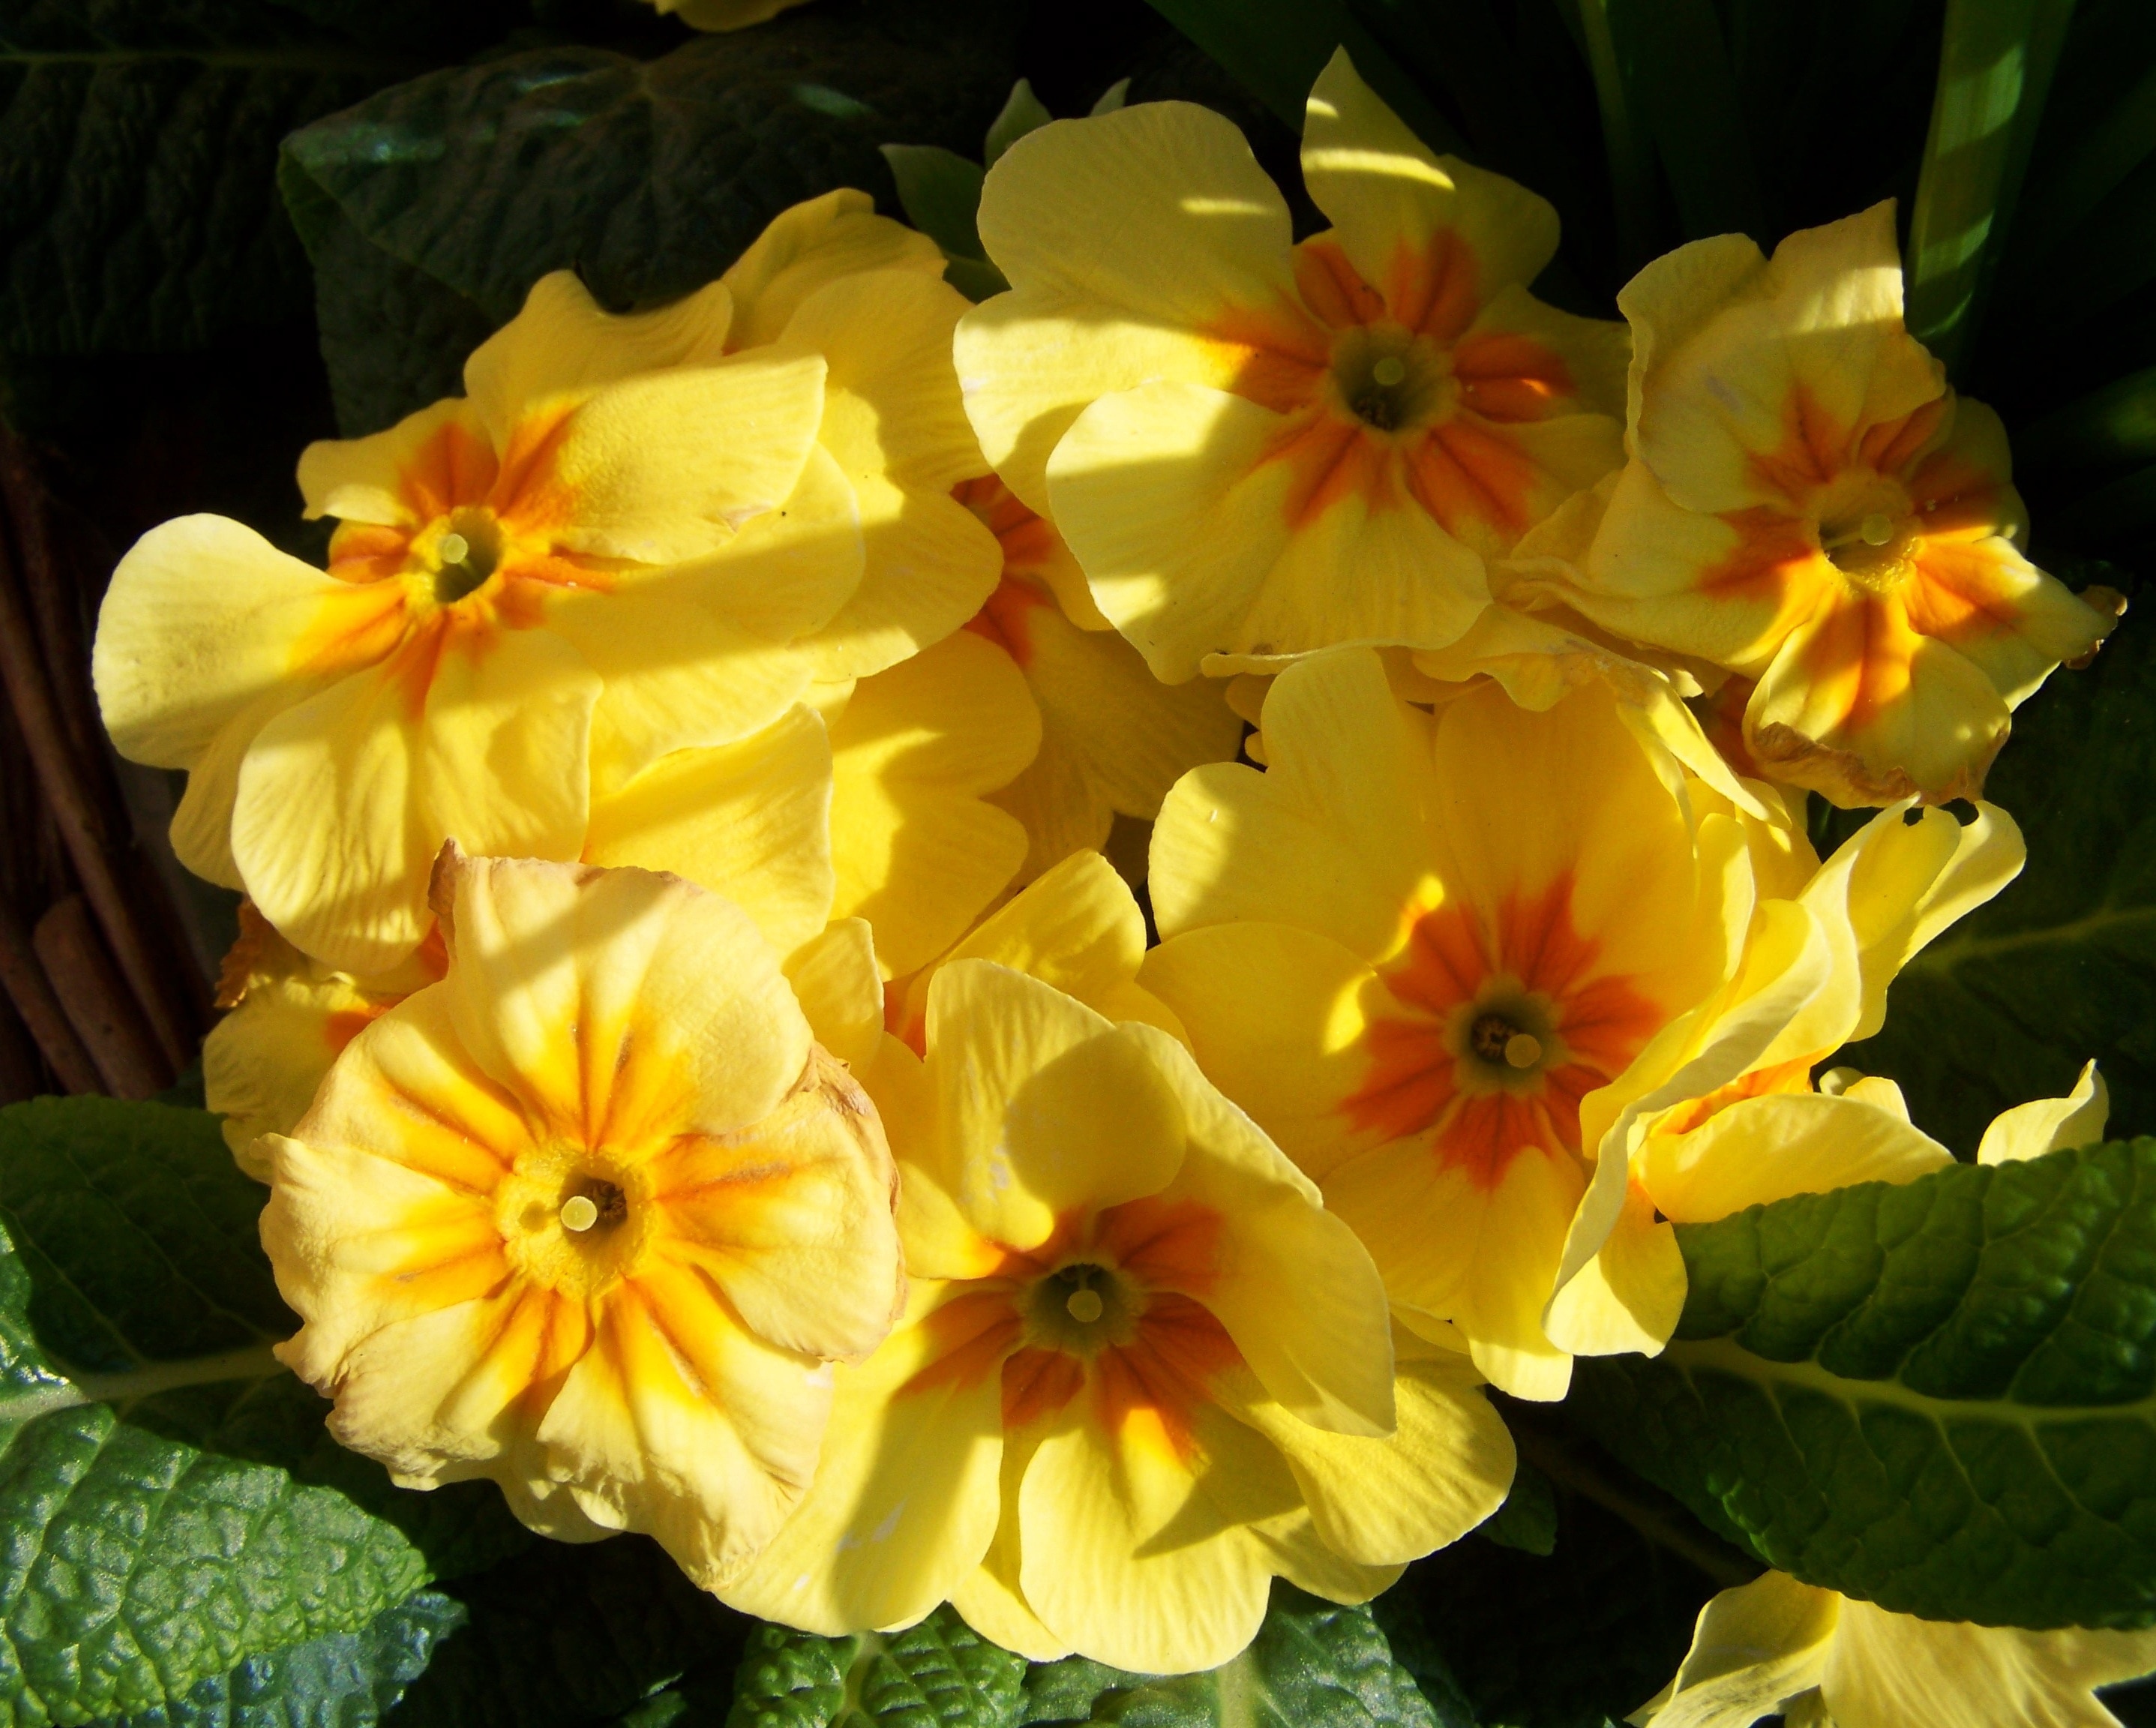 yellow and orange petaled flowers